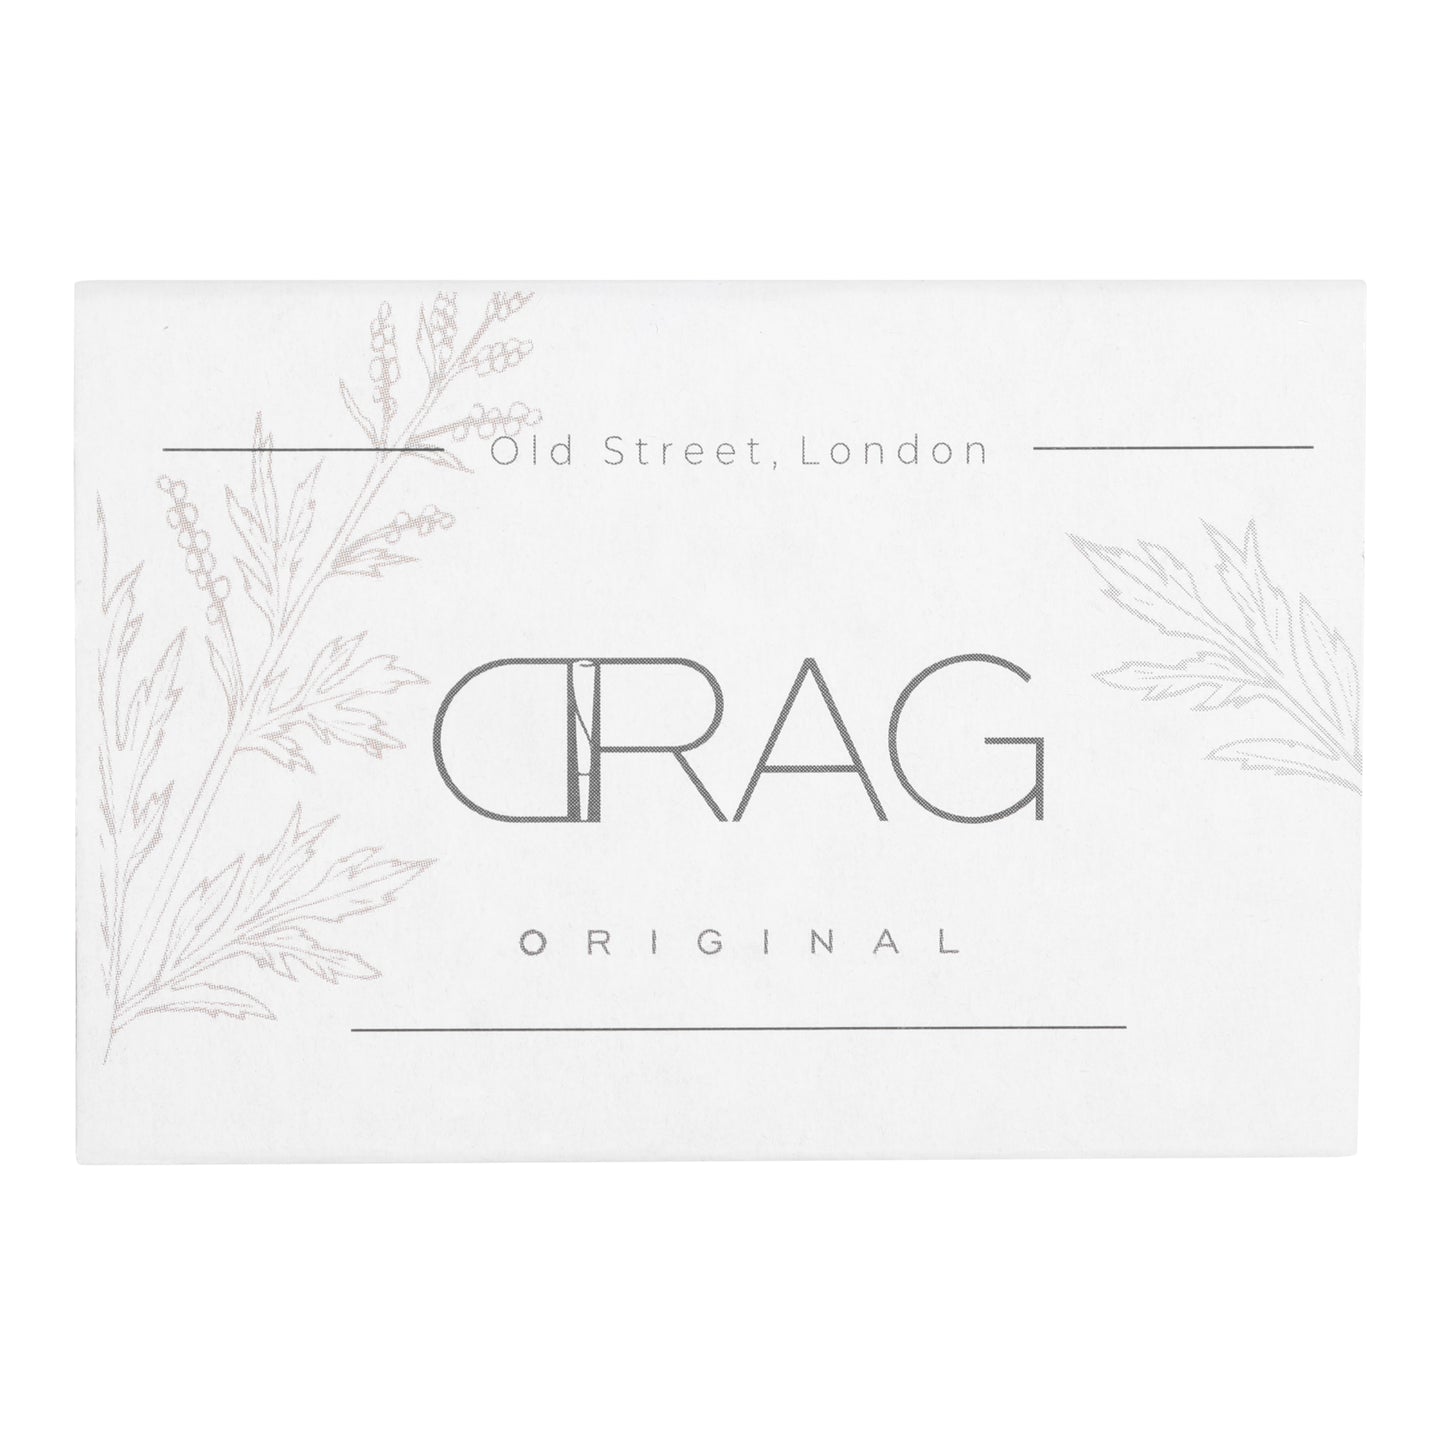 DRAG Herbal Pre Rolled Joints - Original